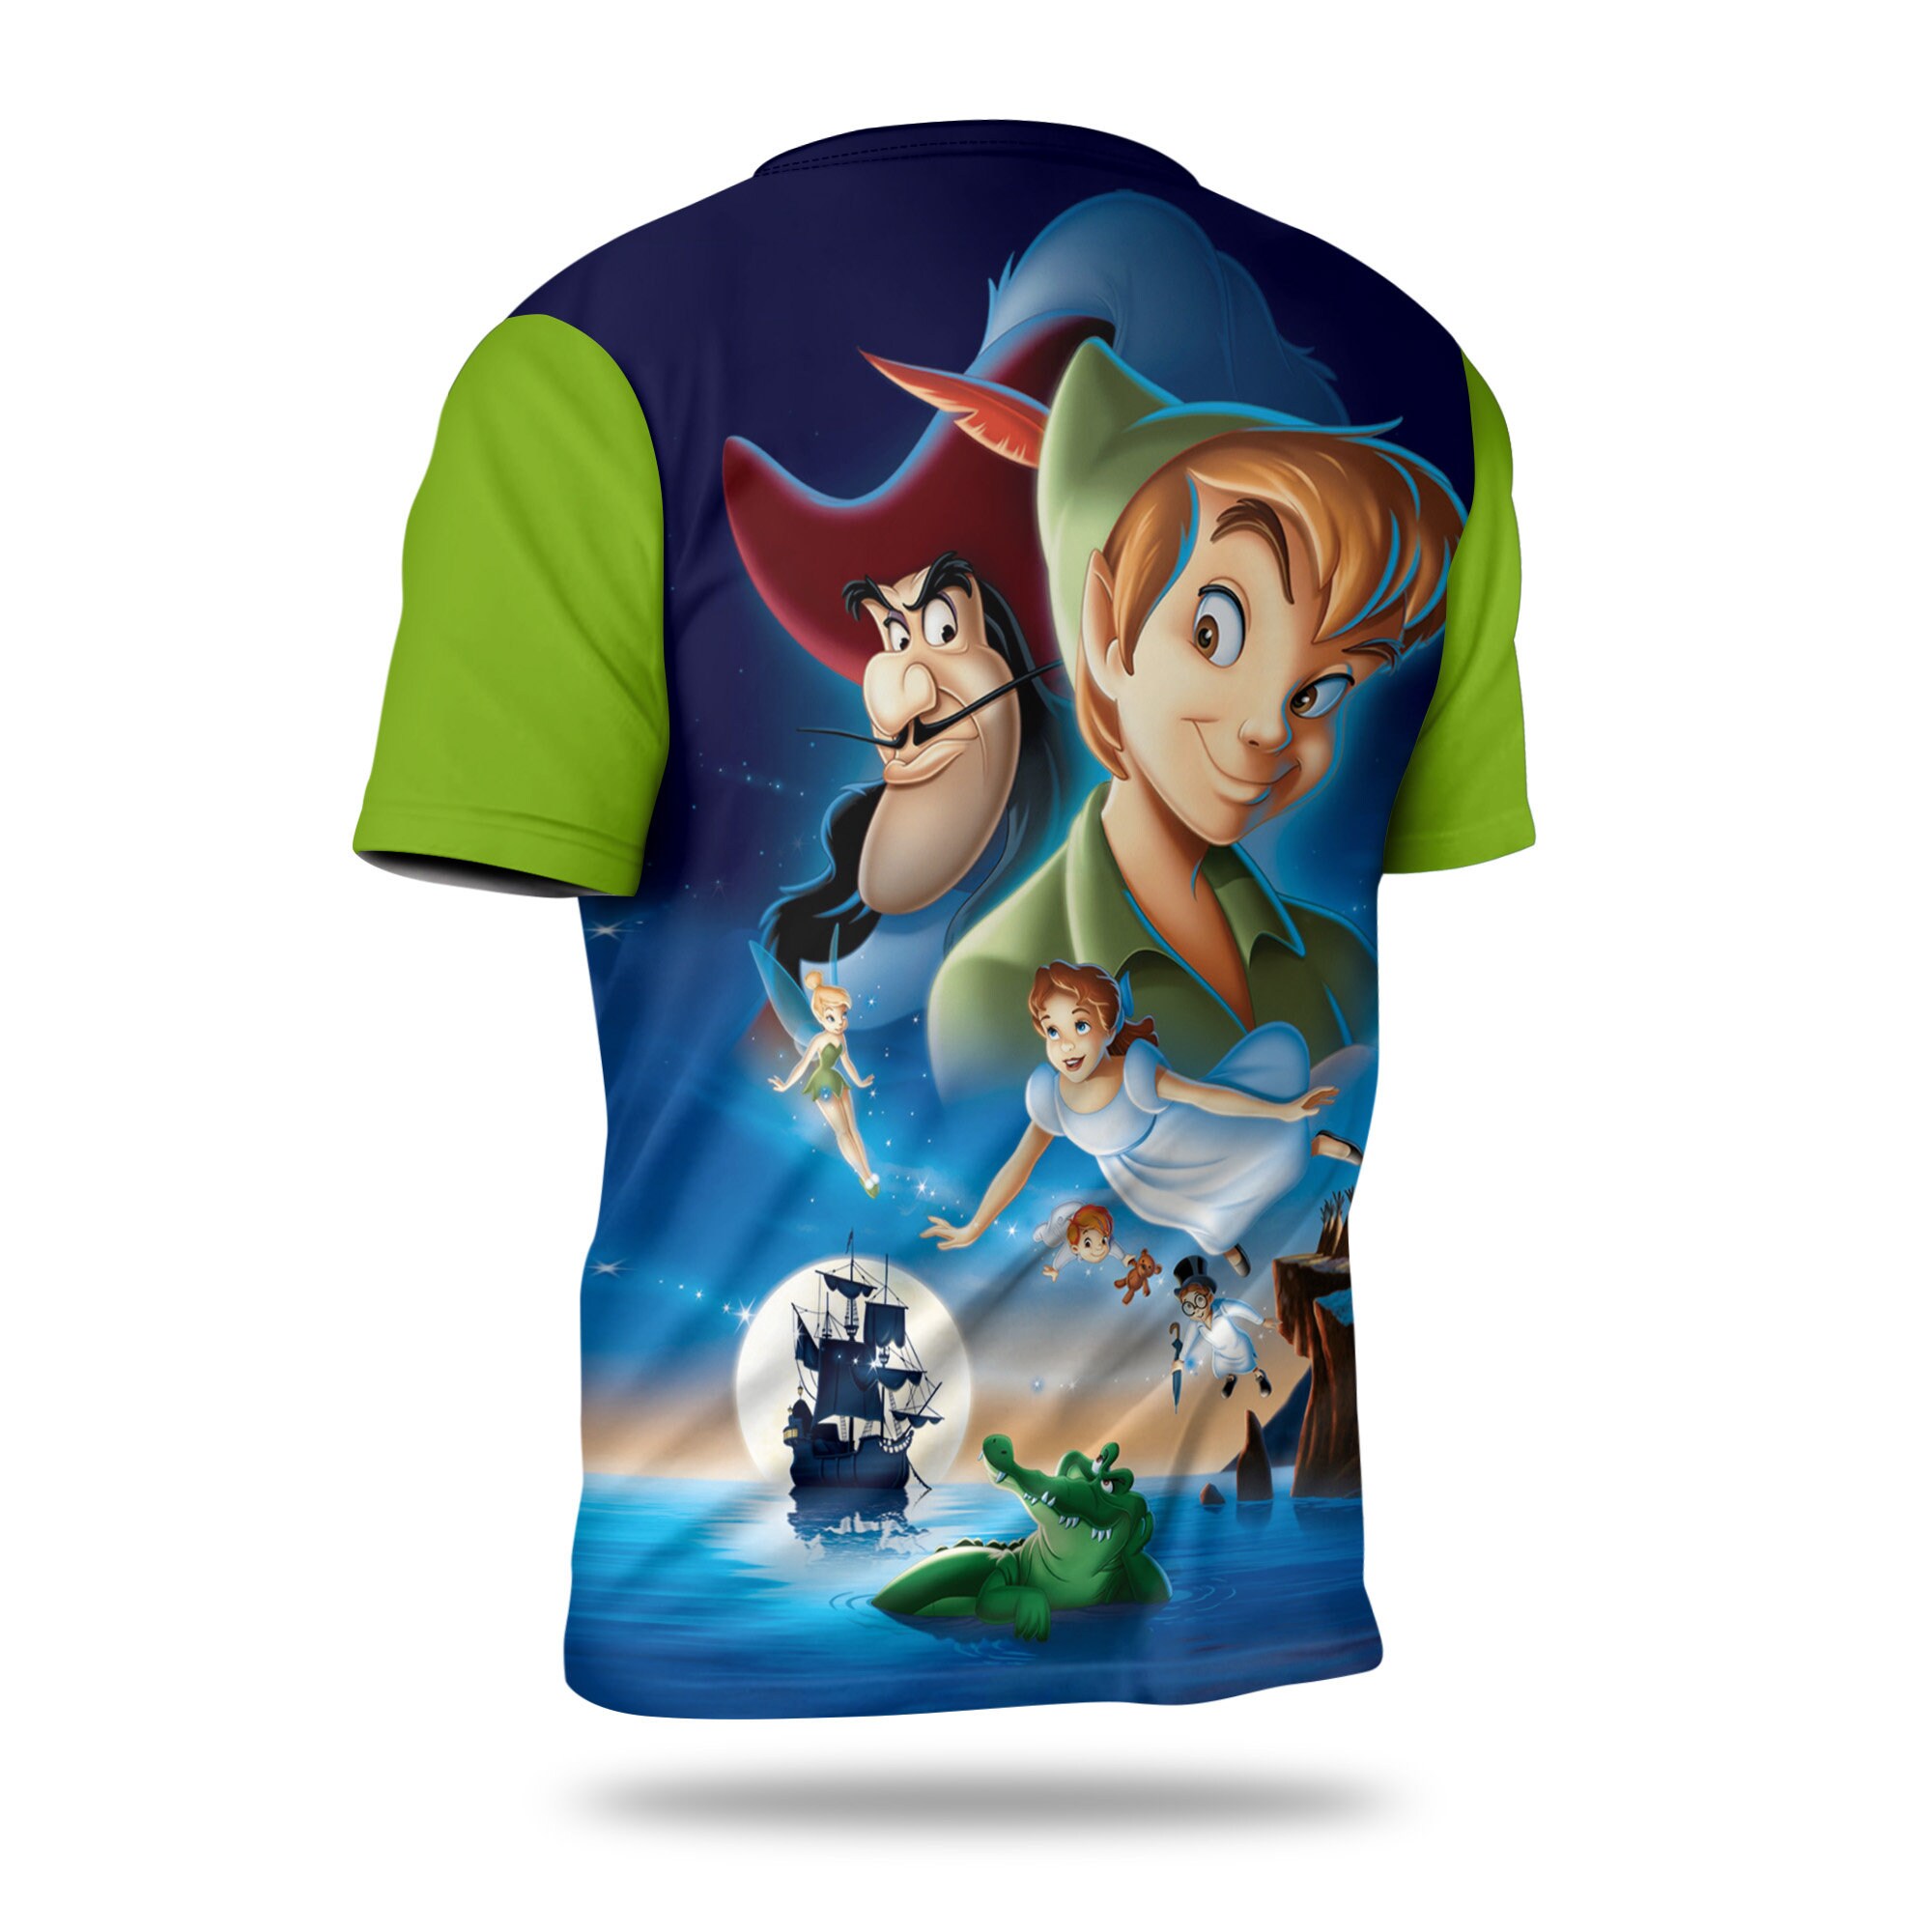 Peter Pan Green Button Overalls Patterns Disney T-shirts